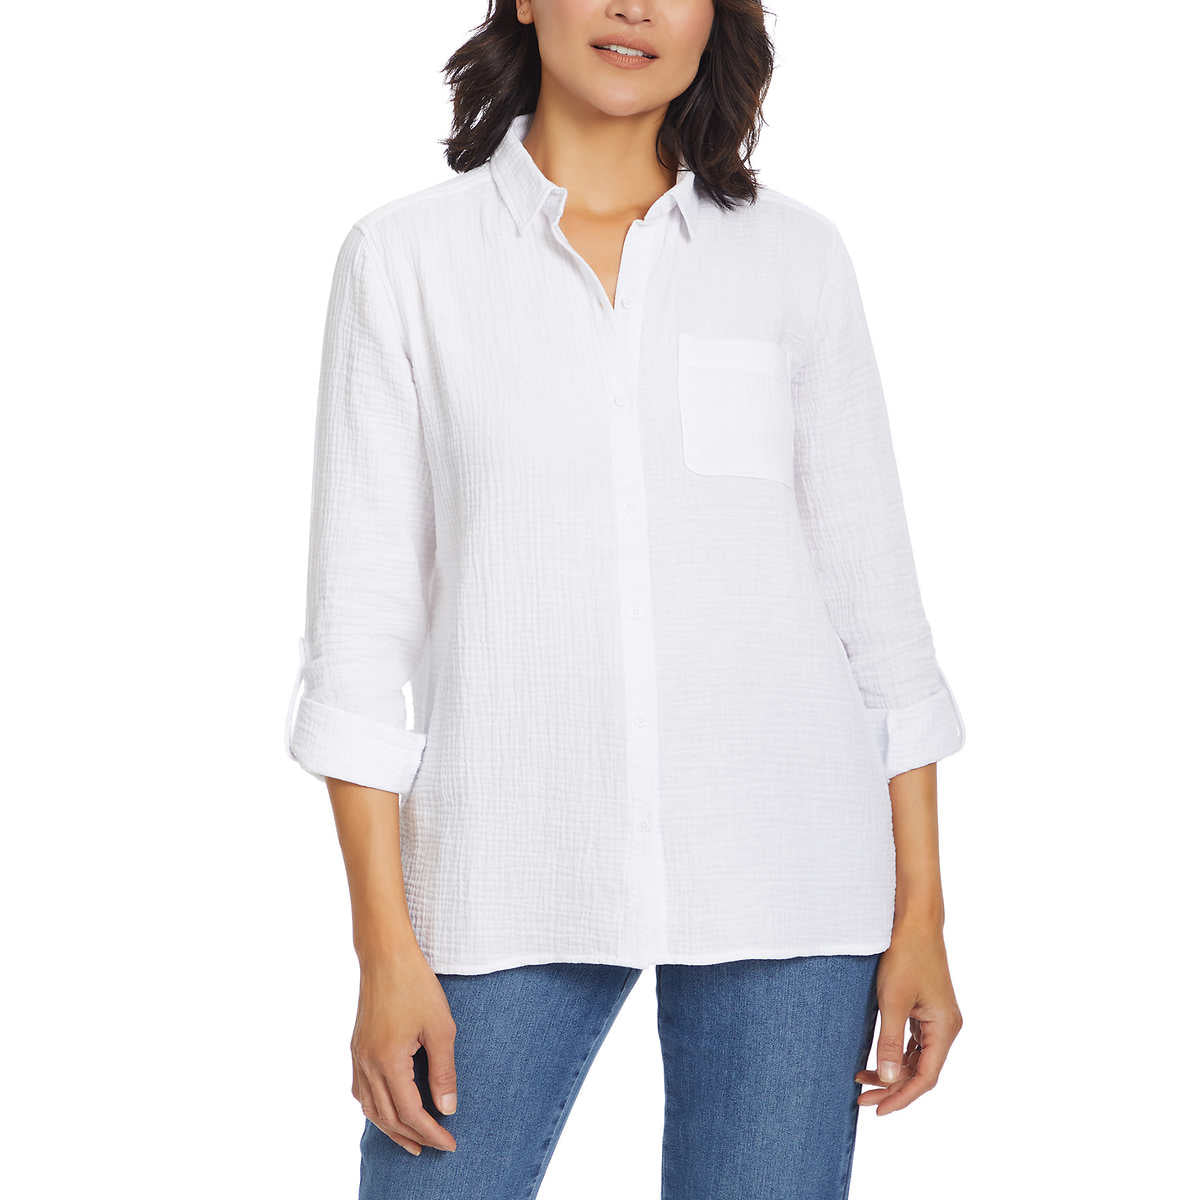 Anne Klein Women's Lightweight Cotton Gauze Top Button Front Shirt